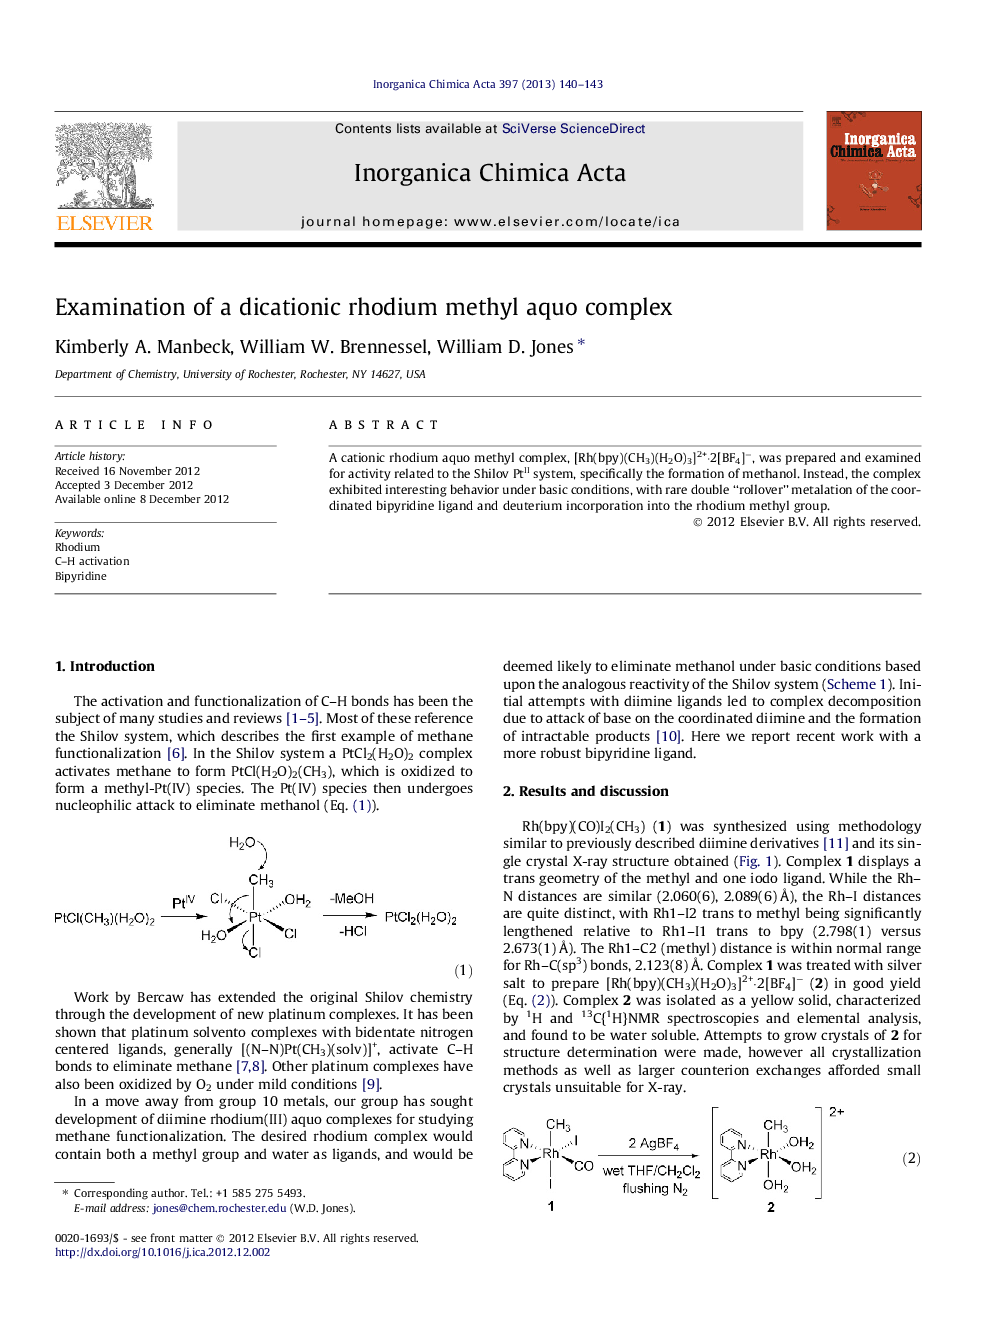 Examination of a dicationic rhodium methyl aquo complex